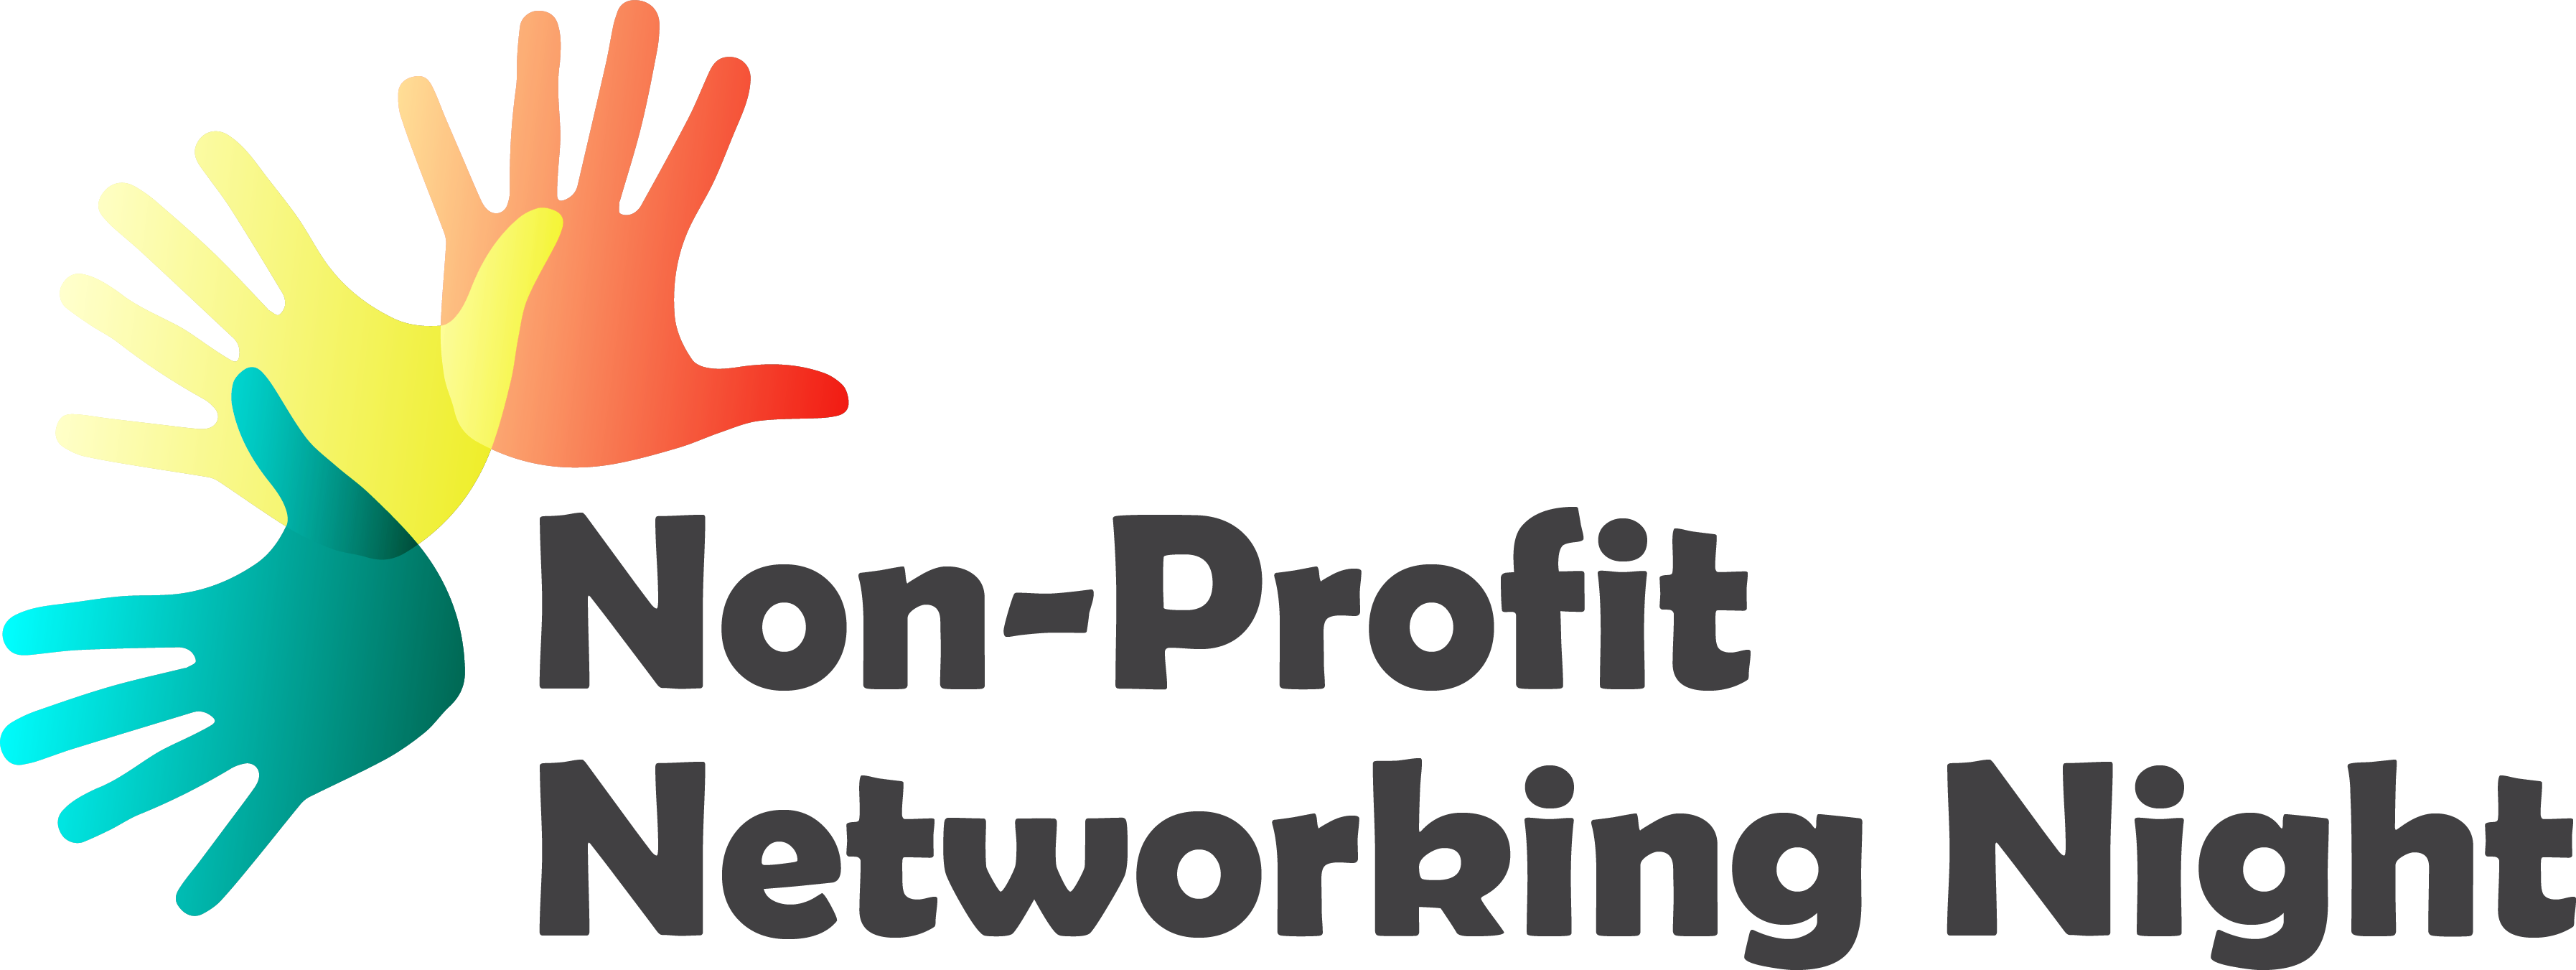 Nonprofit Networking Night logo